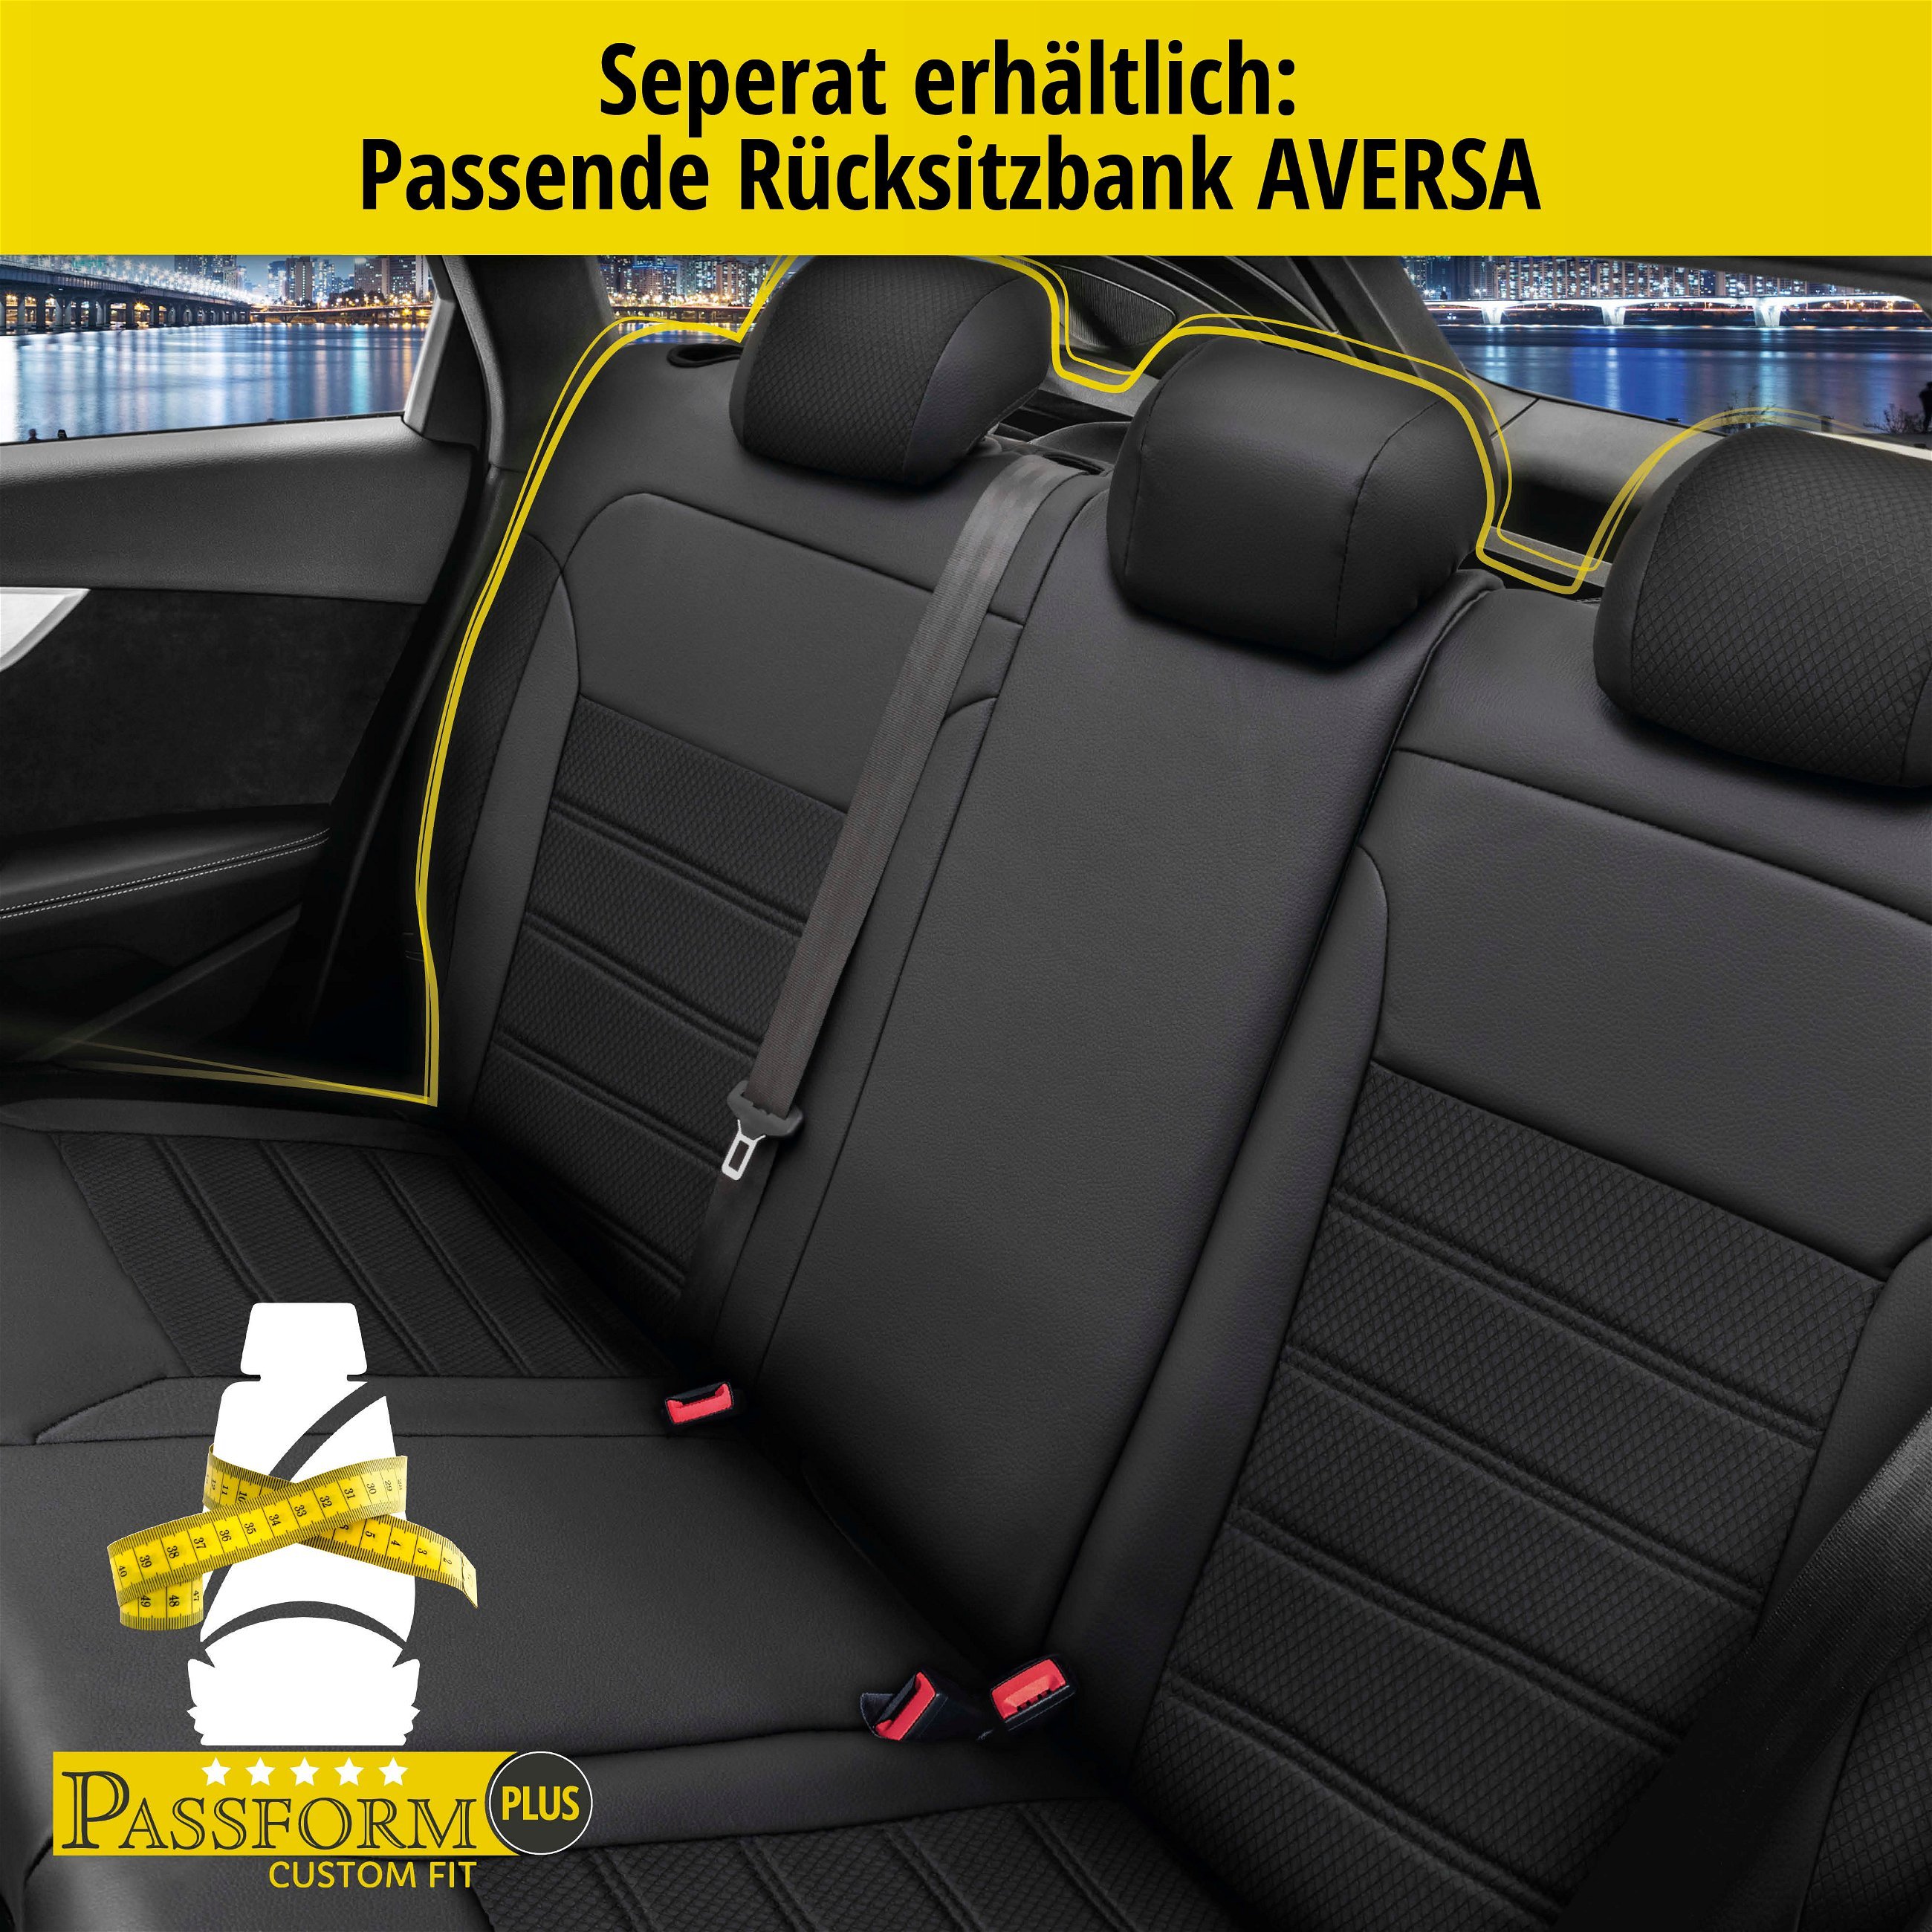 Passform Sitzbezug Aversa für Audi A3 (8P1) 05/2003-12/2013, 2 Einzelsitzbezüge für Sportsitze